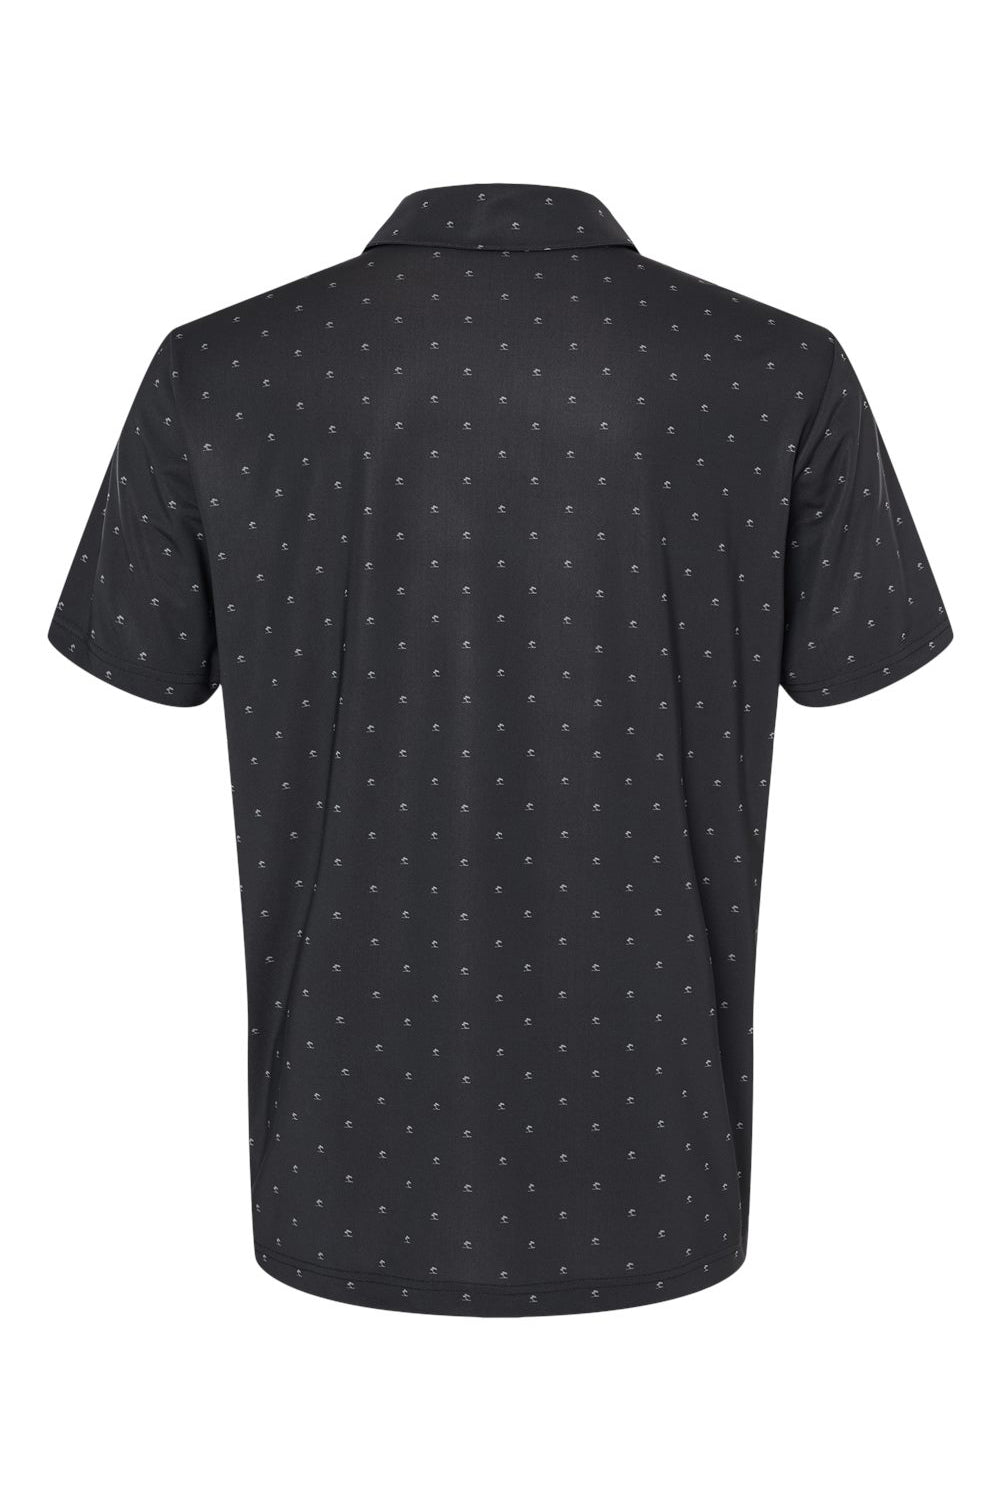 Adidas A574 Mens Pine Tree Short Sleeve Polo Shirt Black/Grey Flat Back